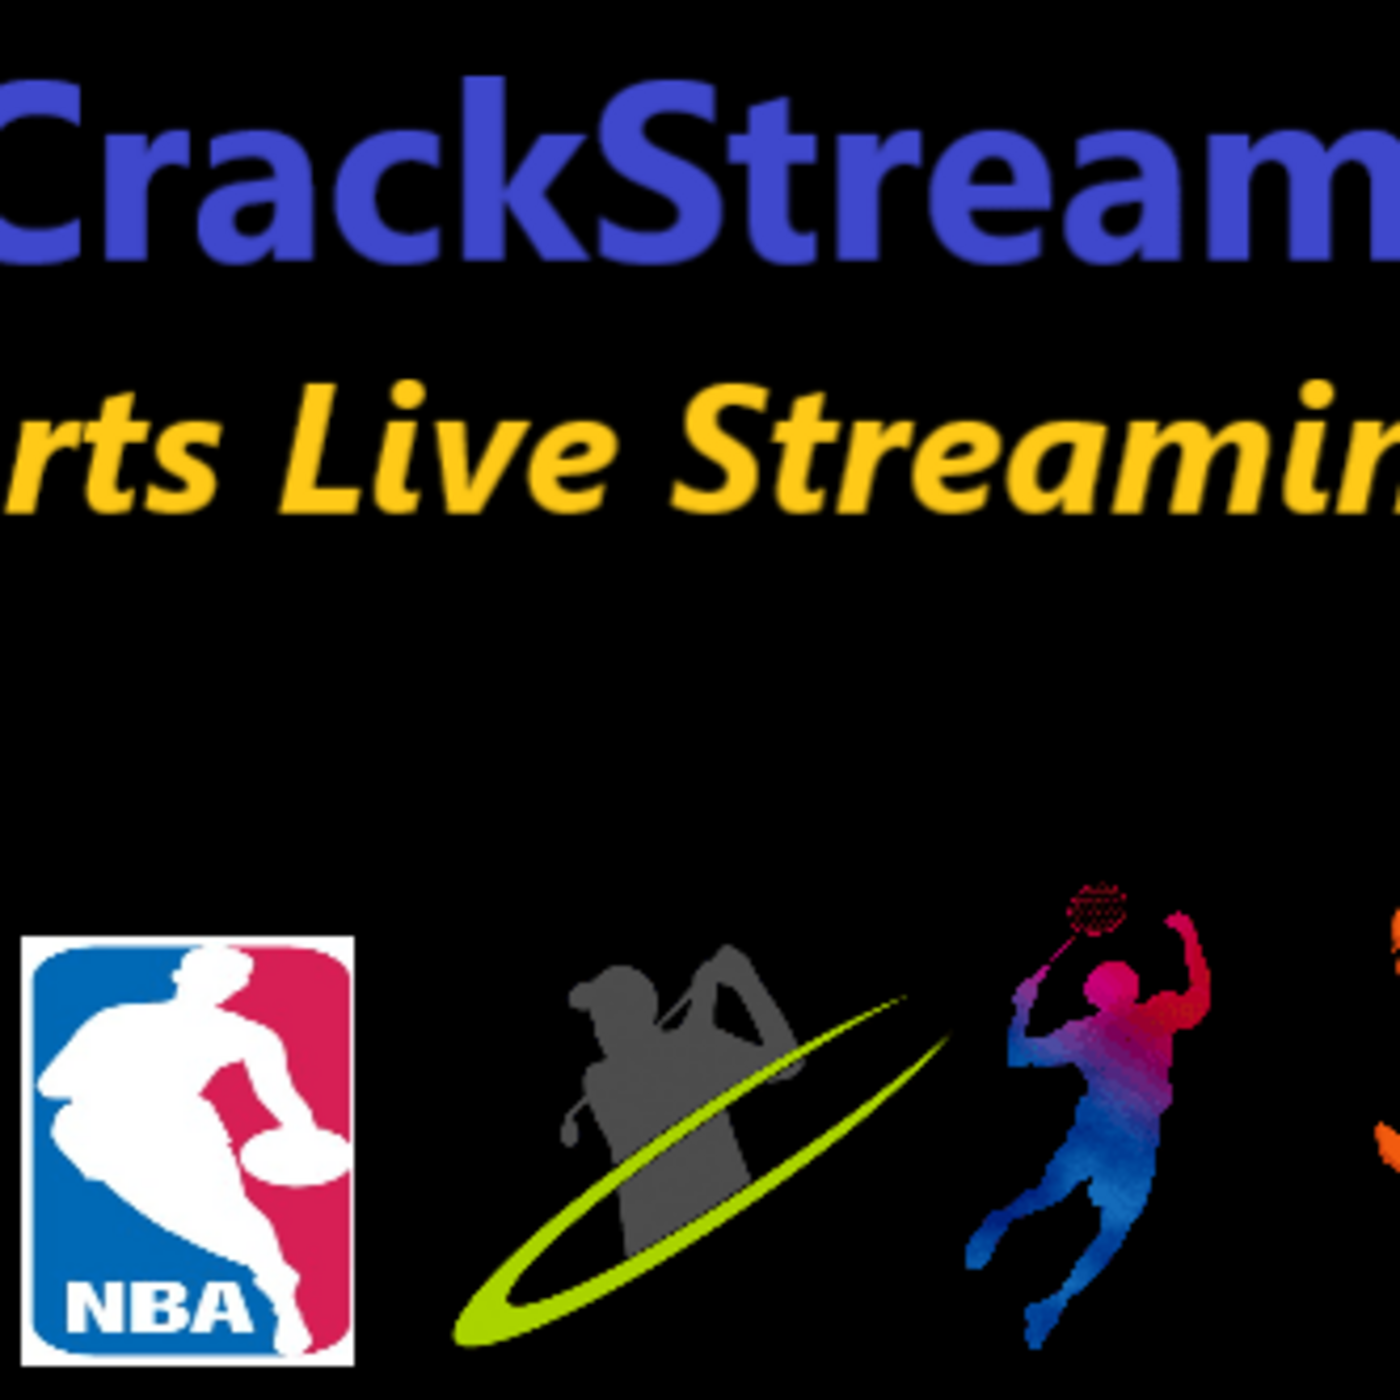 stream nfl games crackstreams